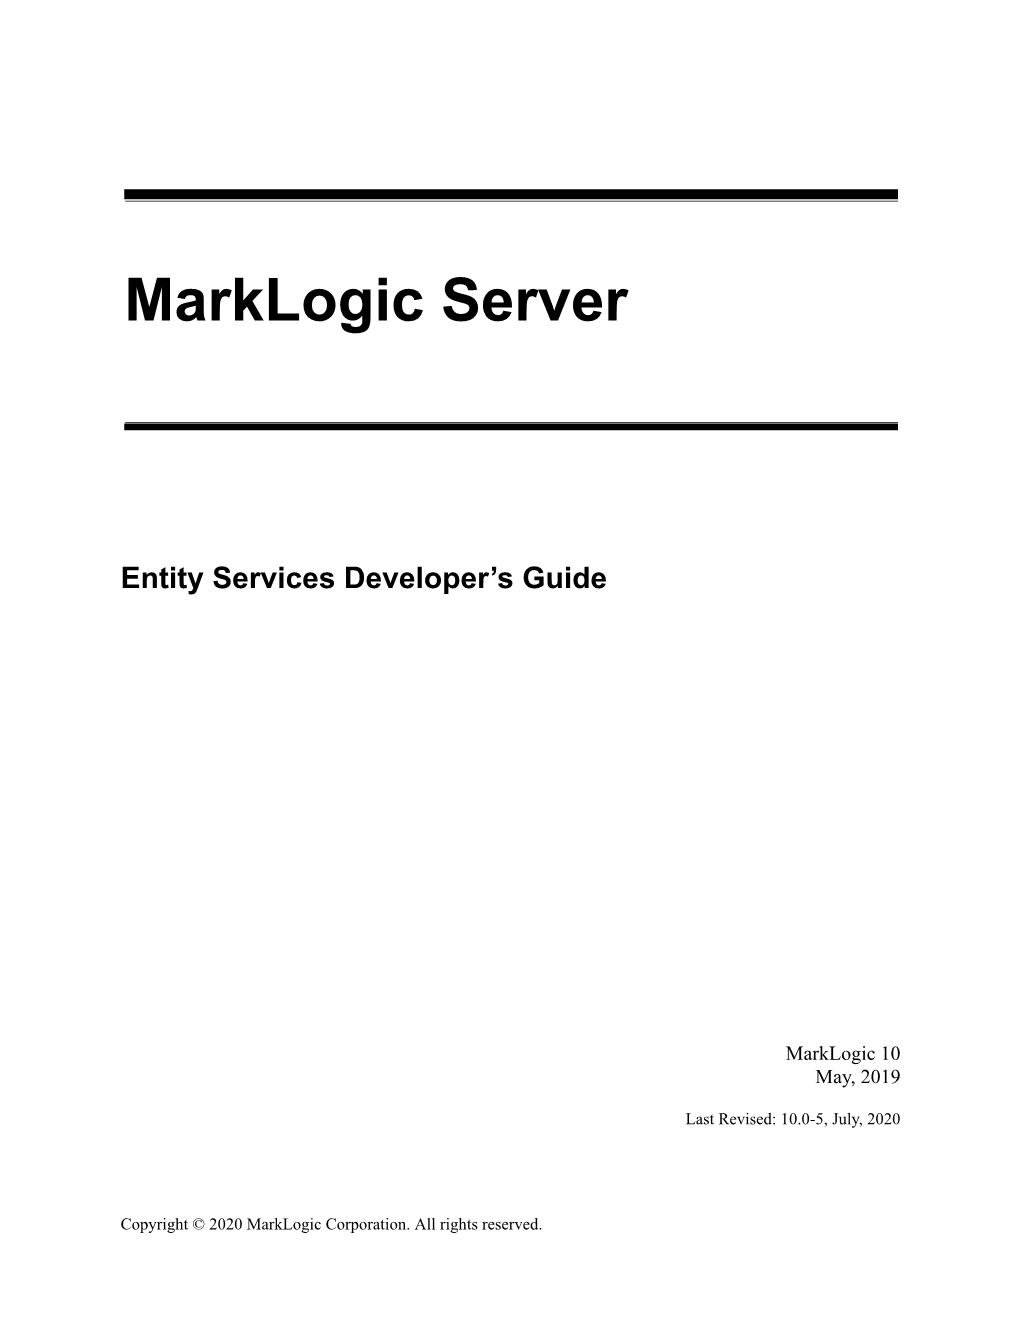 Entity Services Developer's Guide